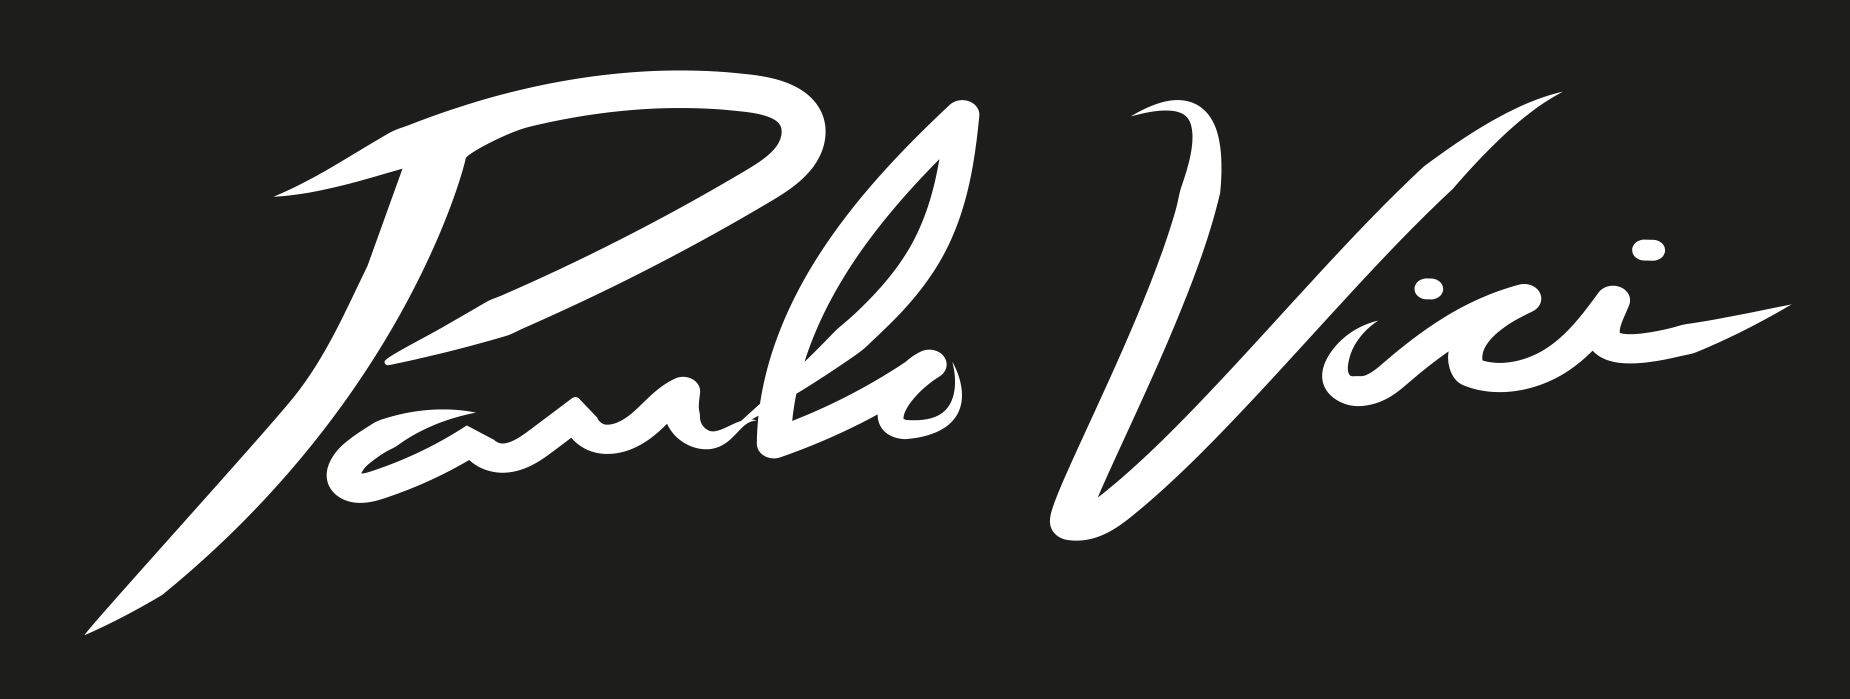 Paulo Vici-logo